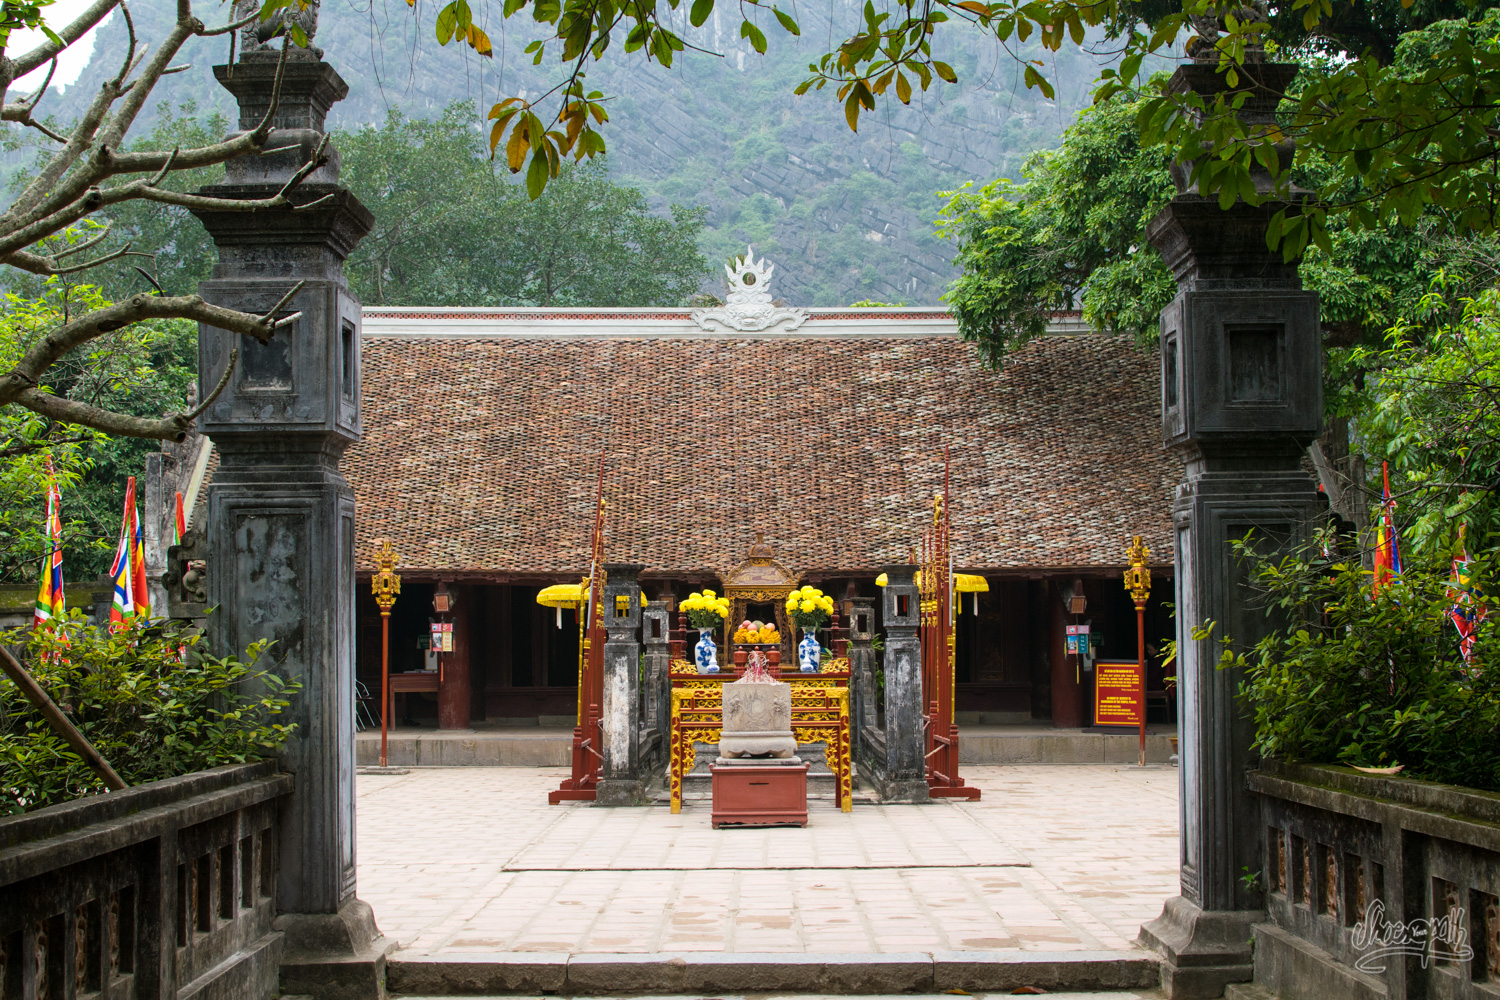 A temple in the old capital Hoa Lu